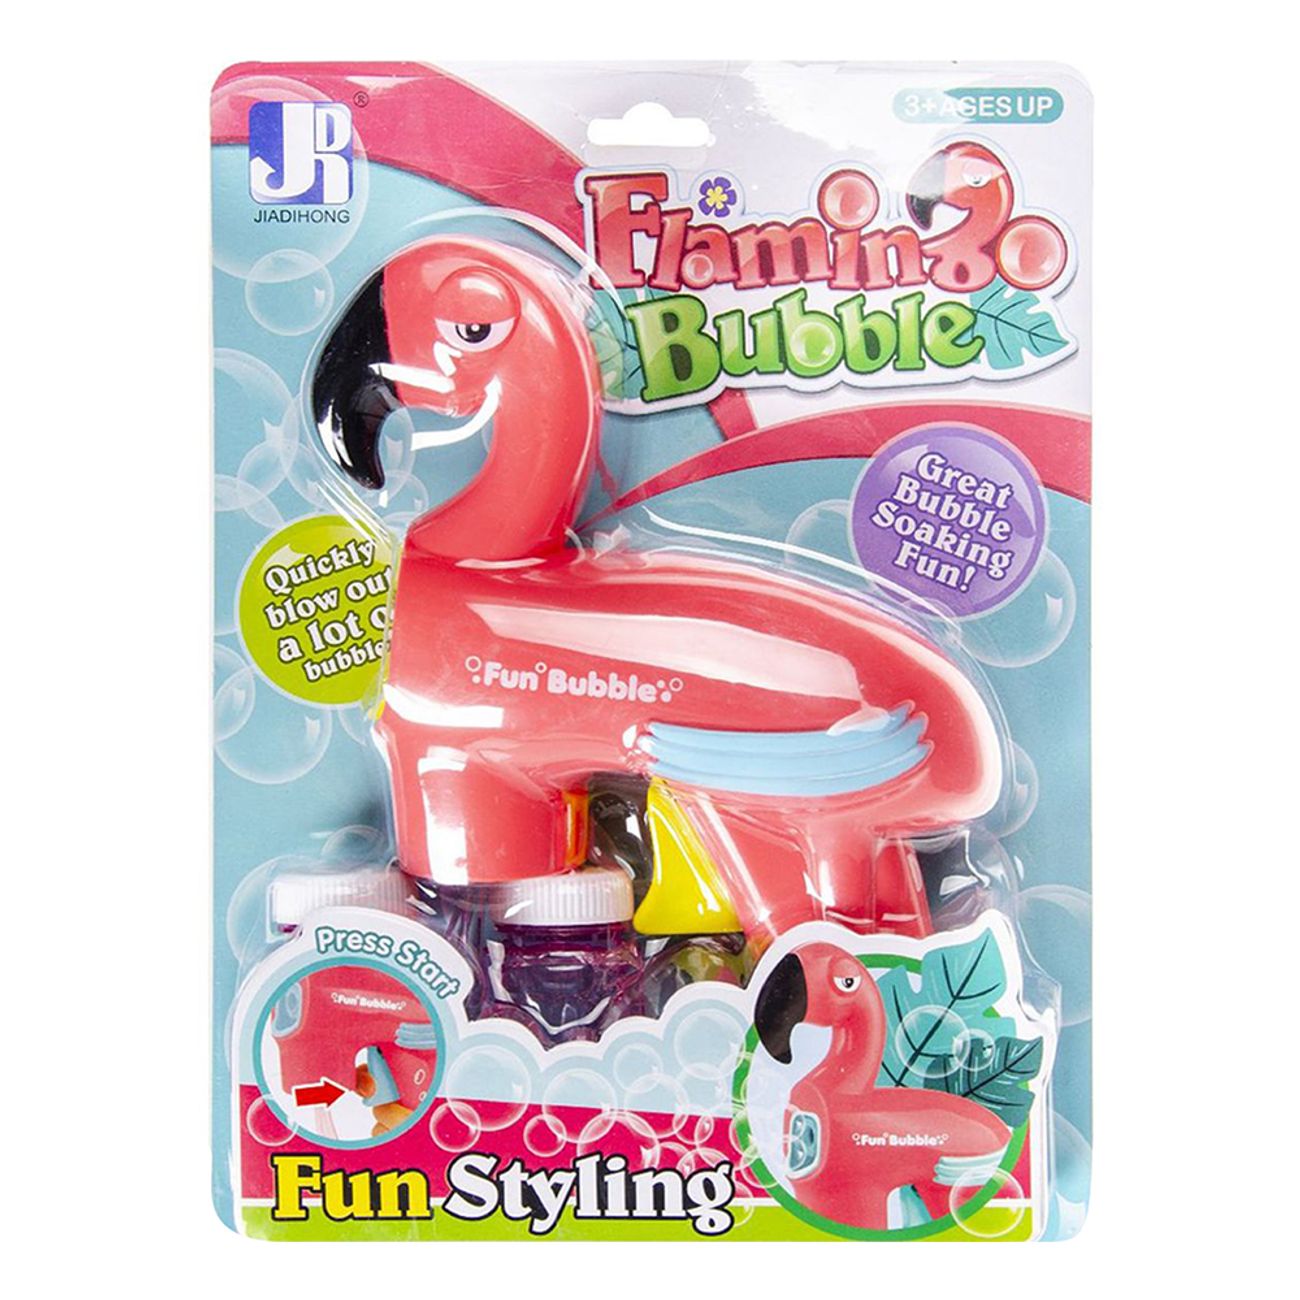 sapbubbelpistol-flamingo-101195-2